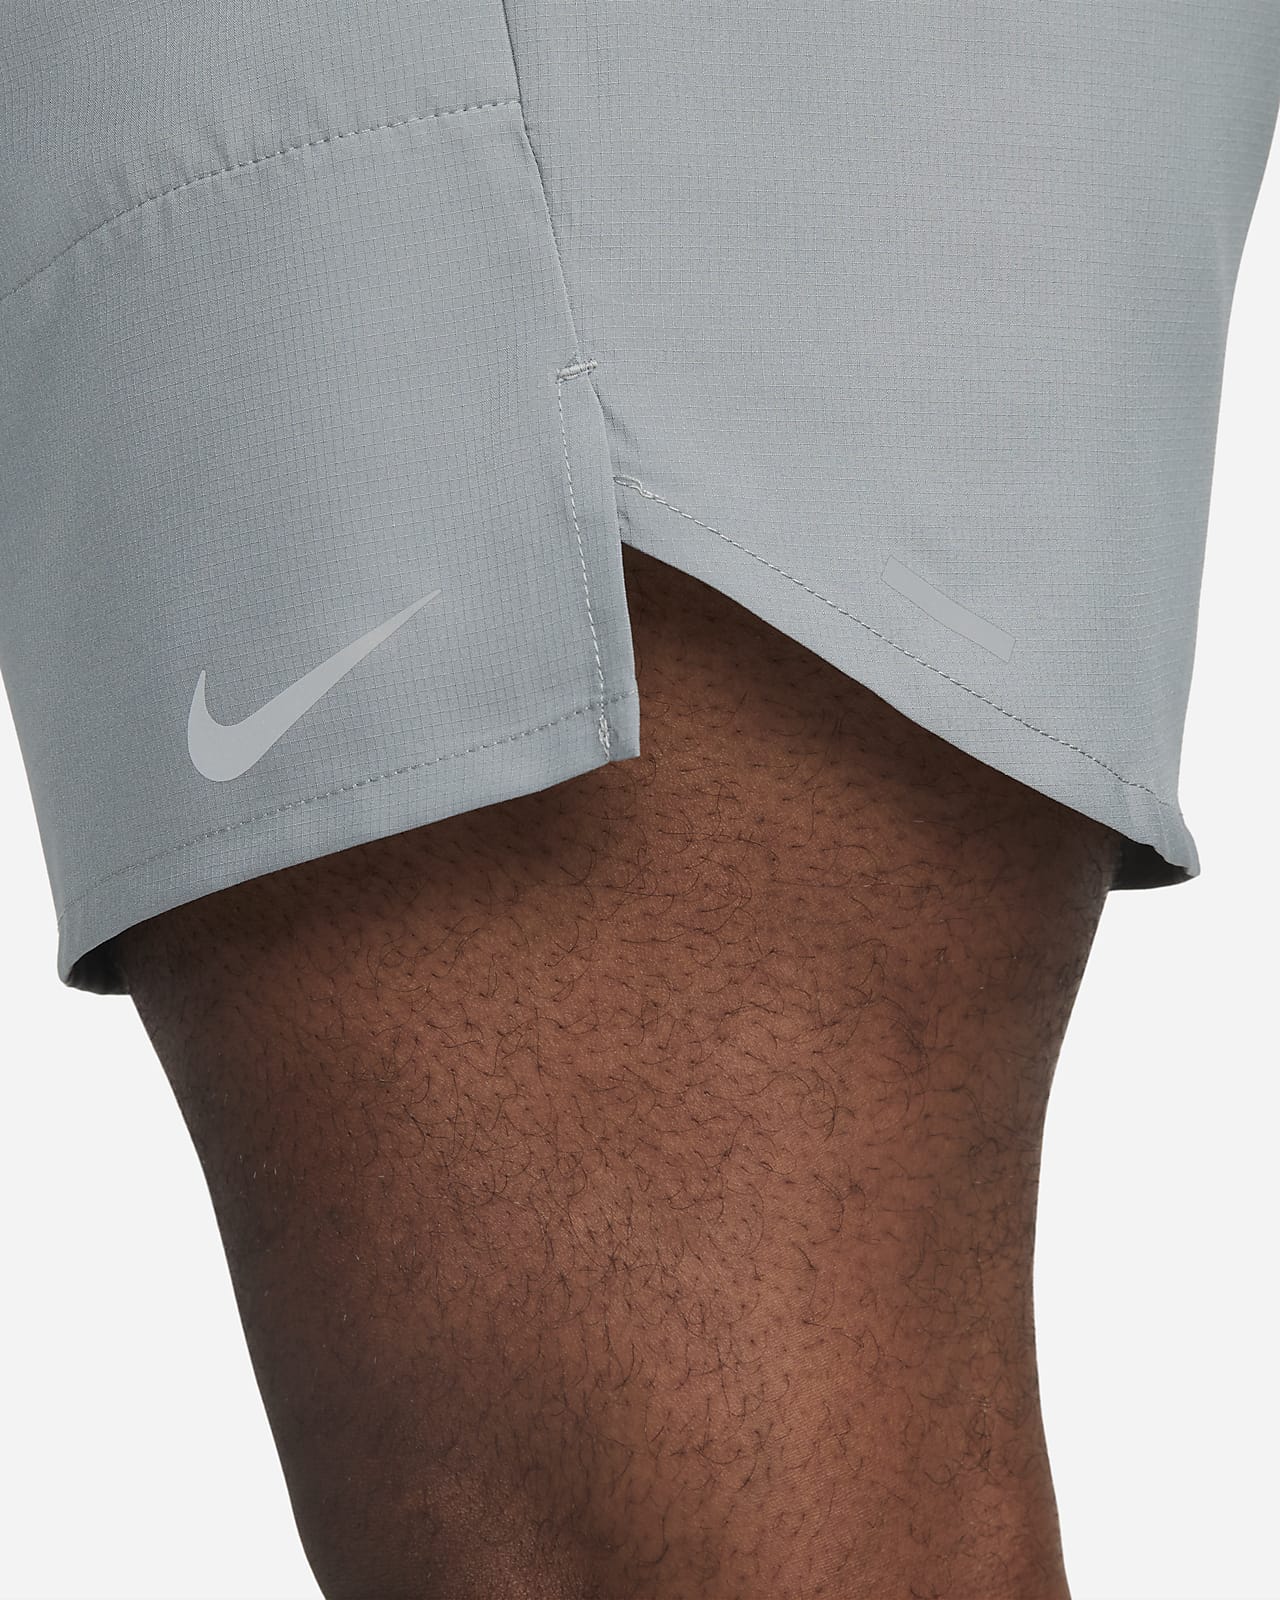 Nike Dri-FIT Training Shorts - Mens